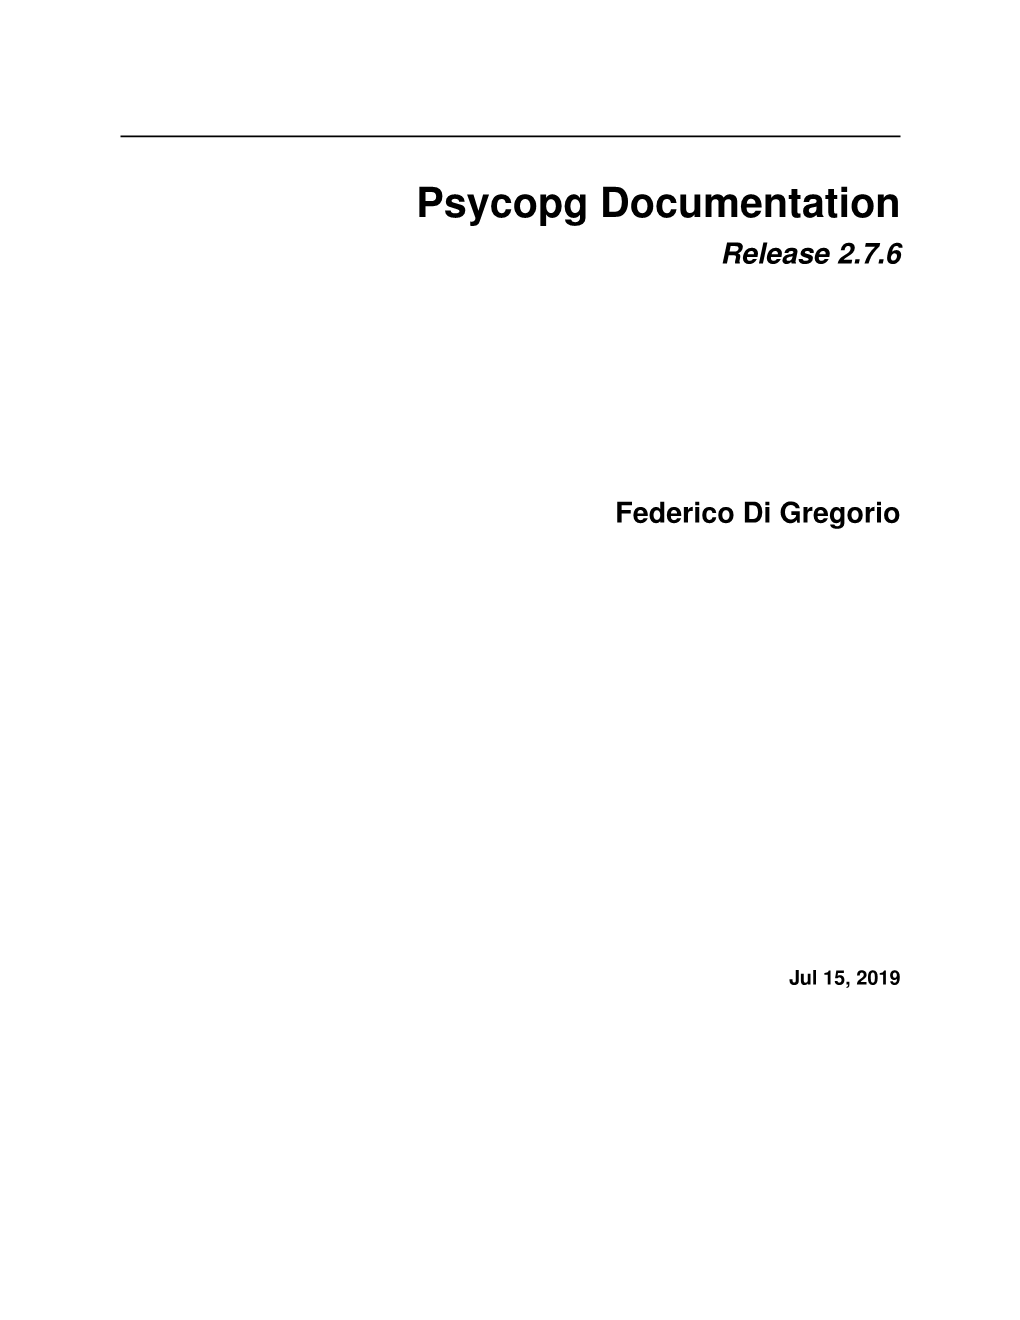 Psycopg Documentation Release 2.7.6